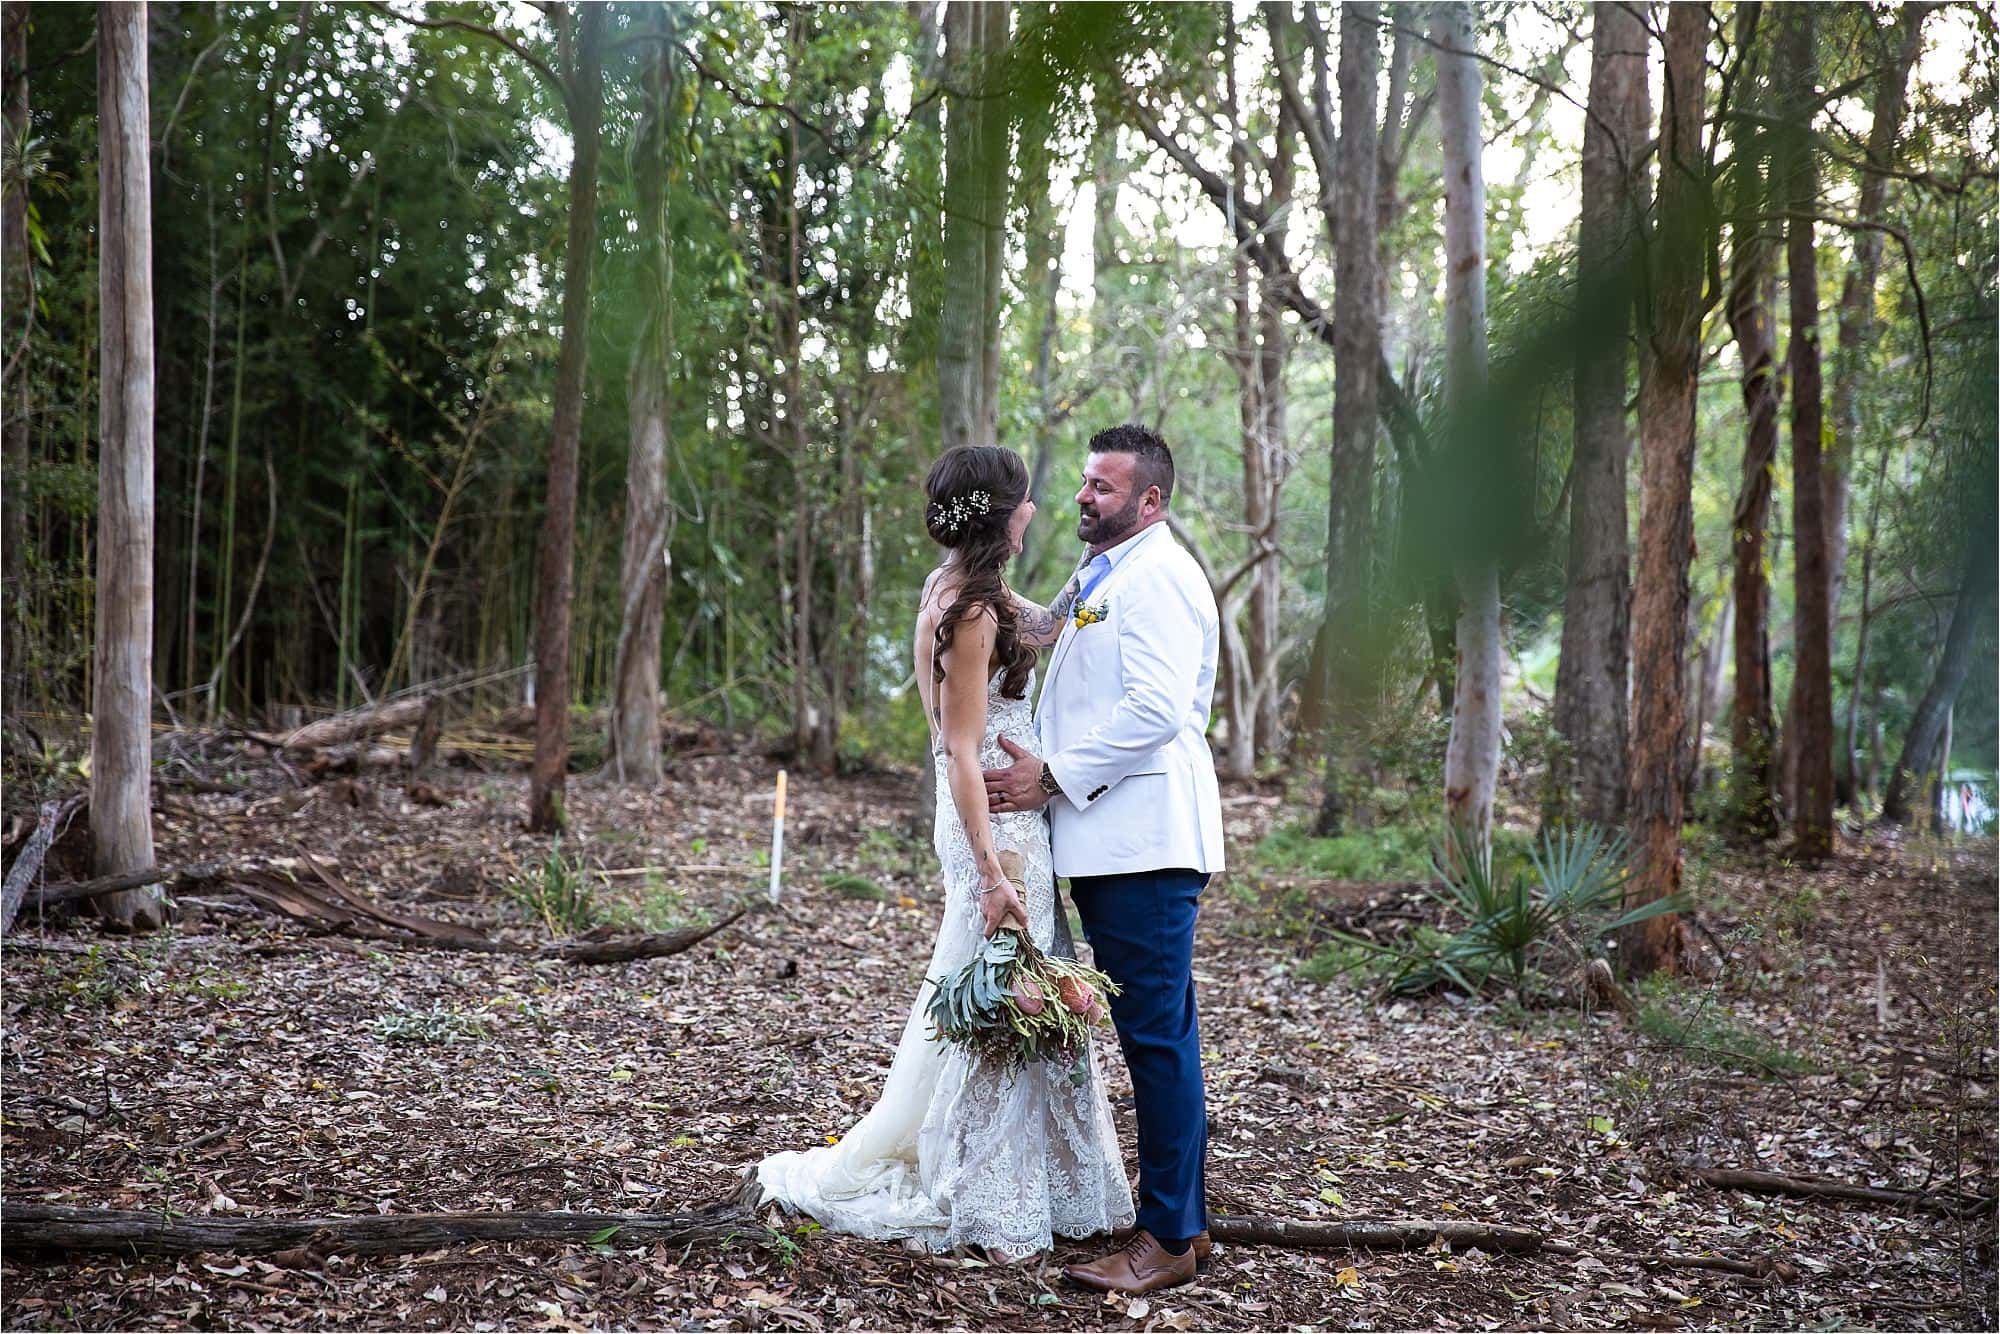 Brisbane Wedding photographer Bec Pattinson Photography